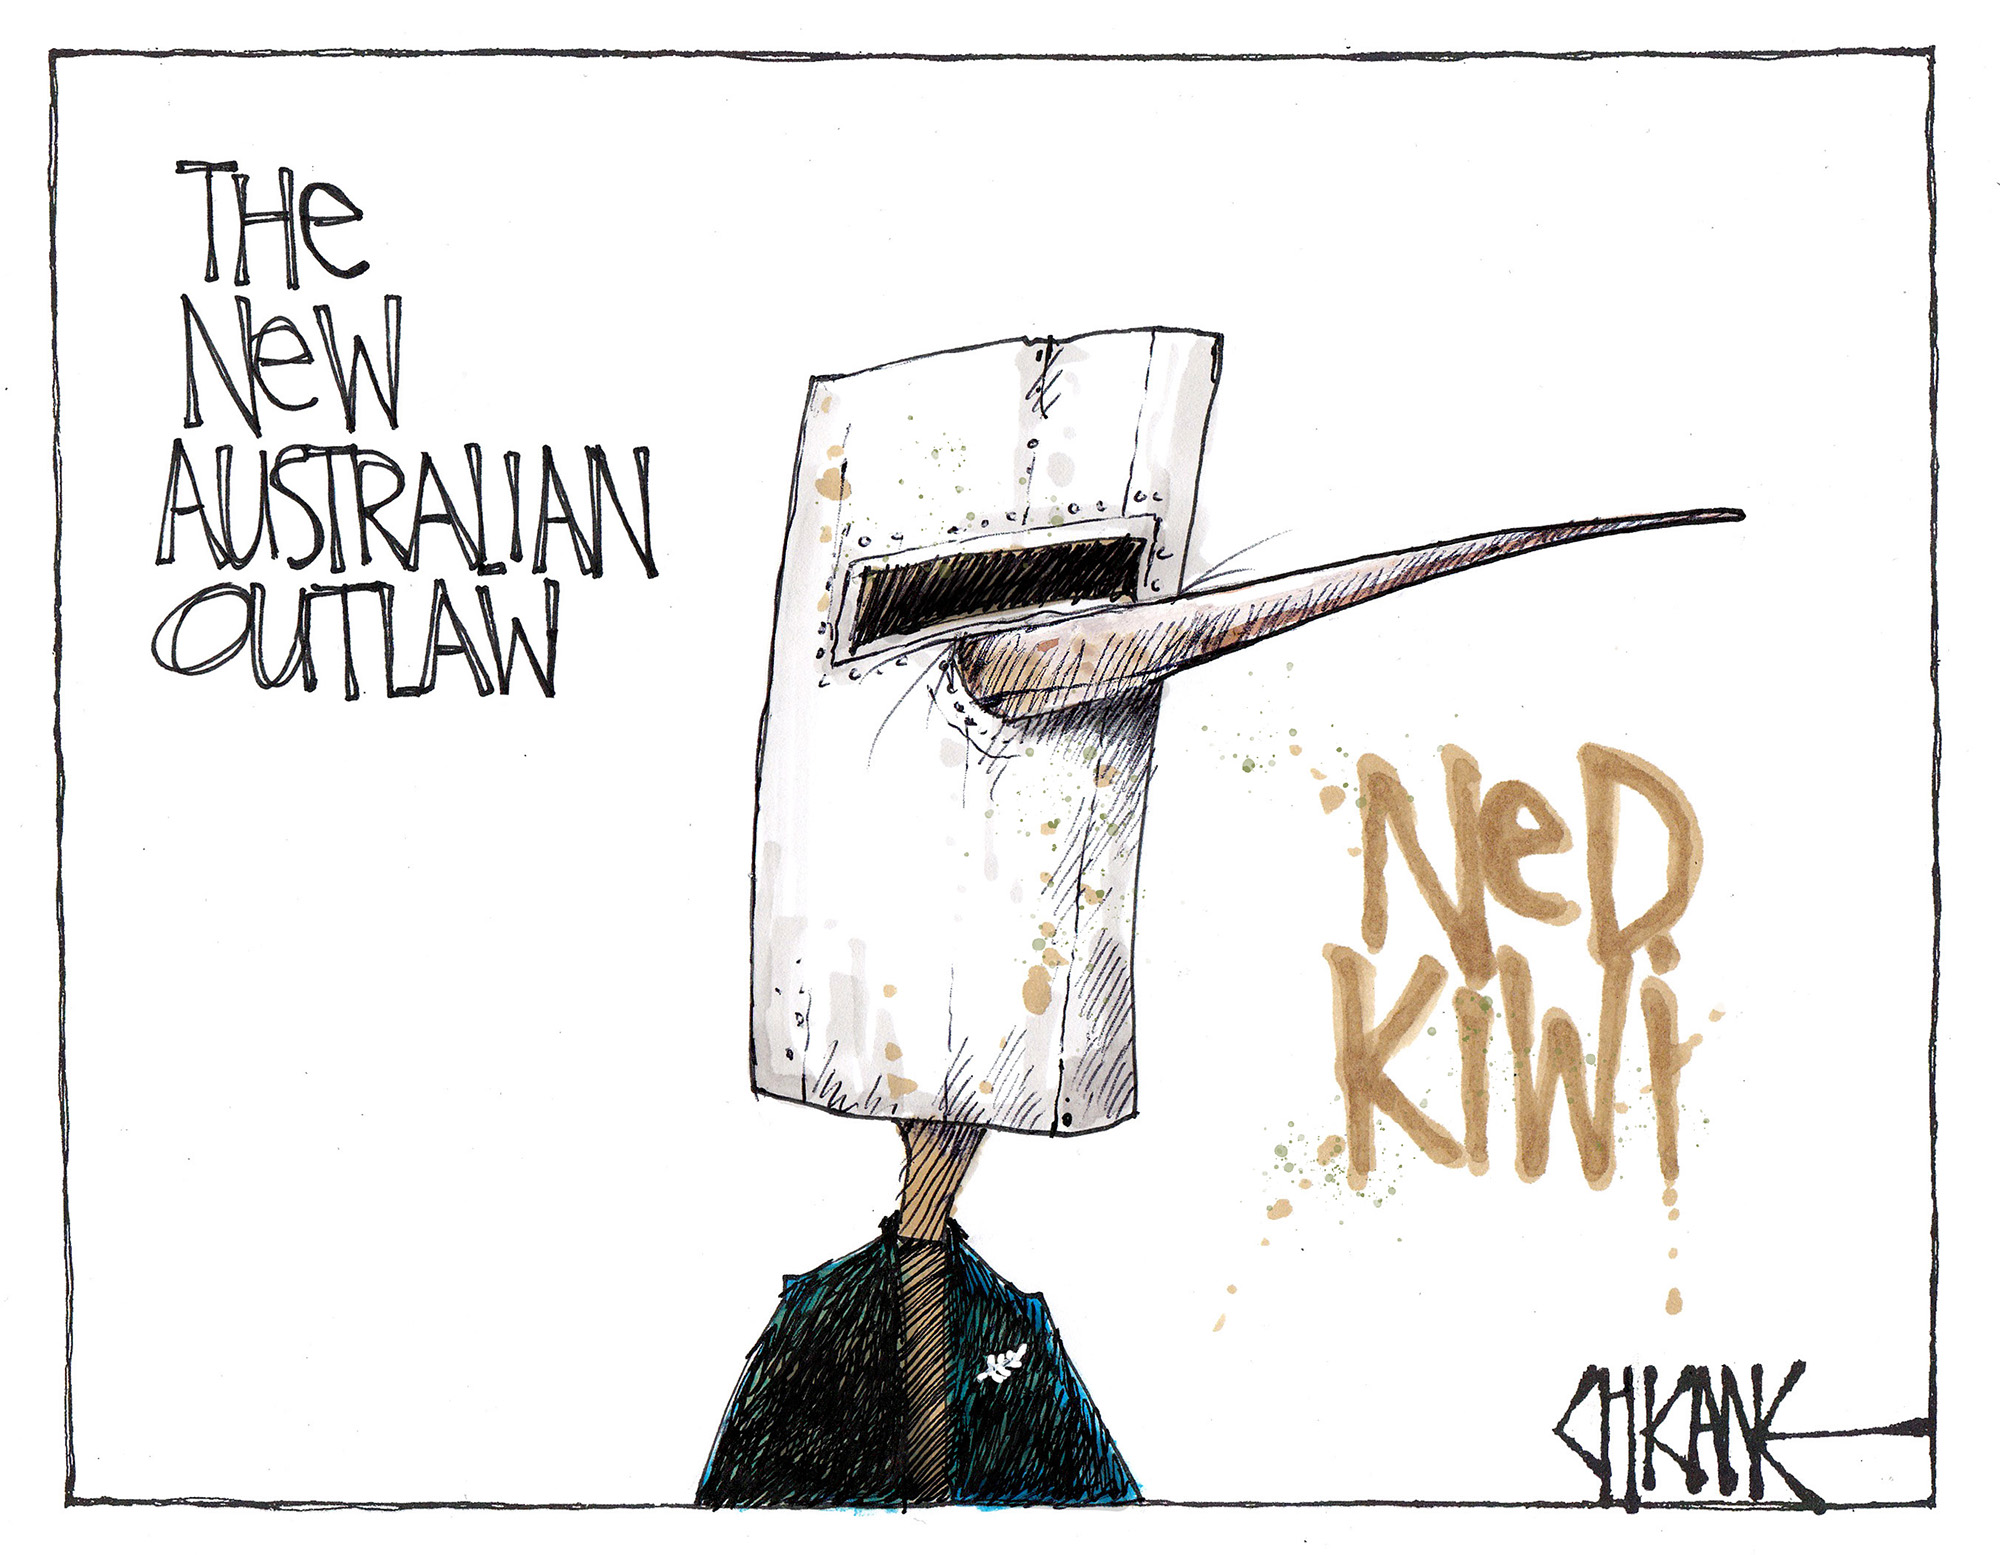 The New Australian Outlaw, Ned Kiwi. Cartoon by Chicane.